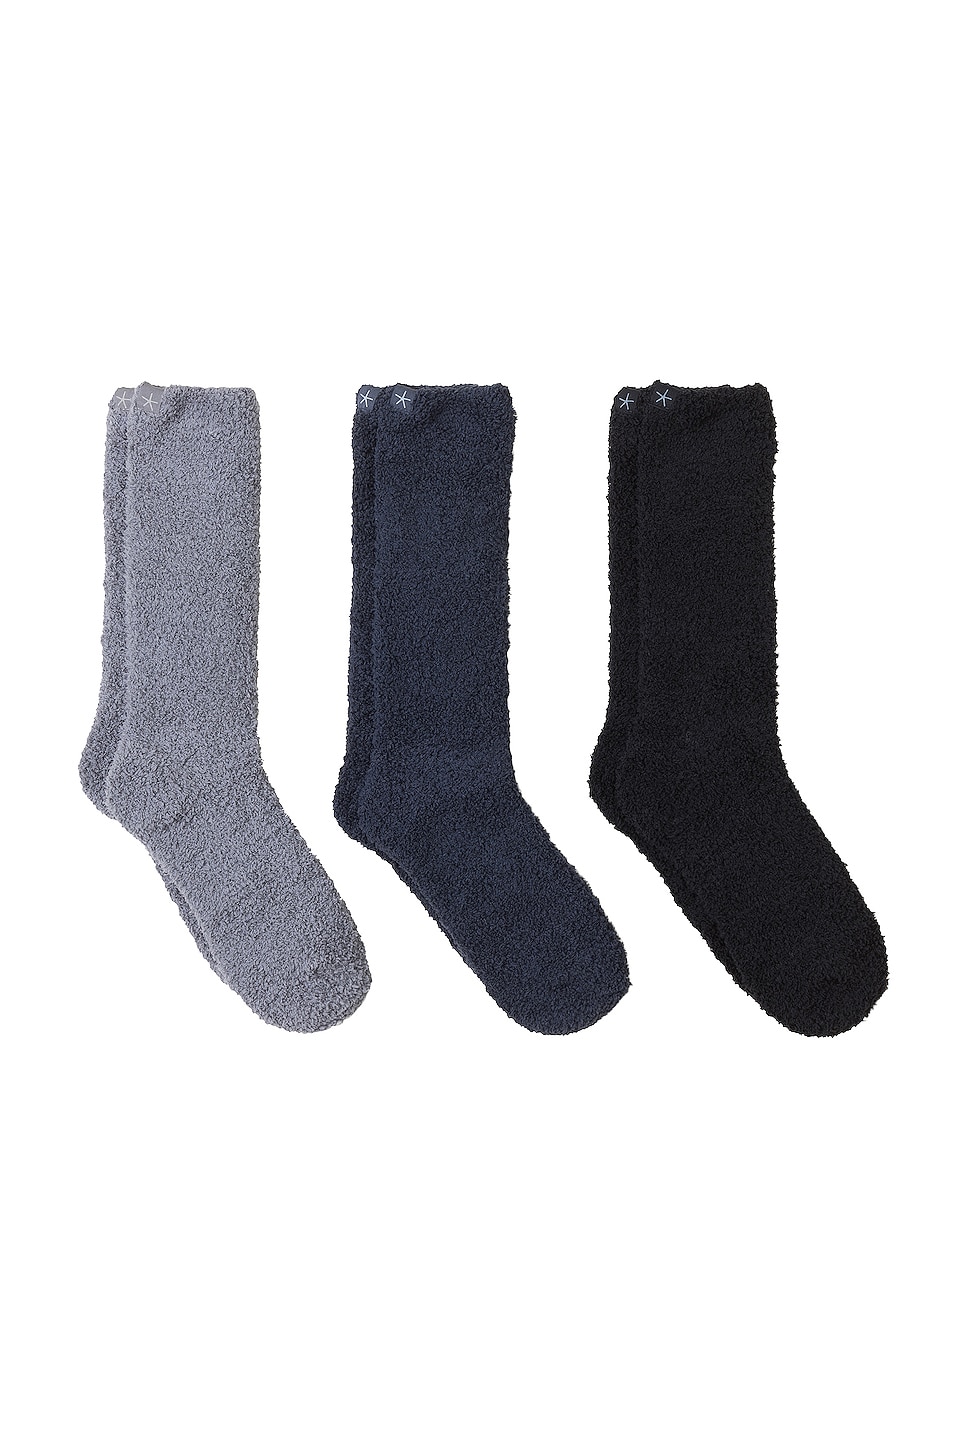 Barefoot Dreams Cozychic 3 Pair Sock Set in Black Mult